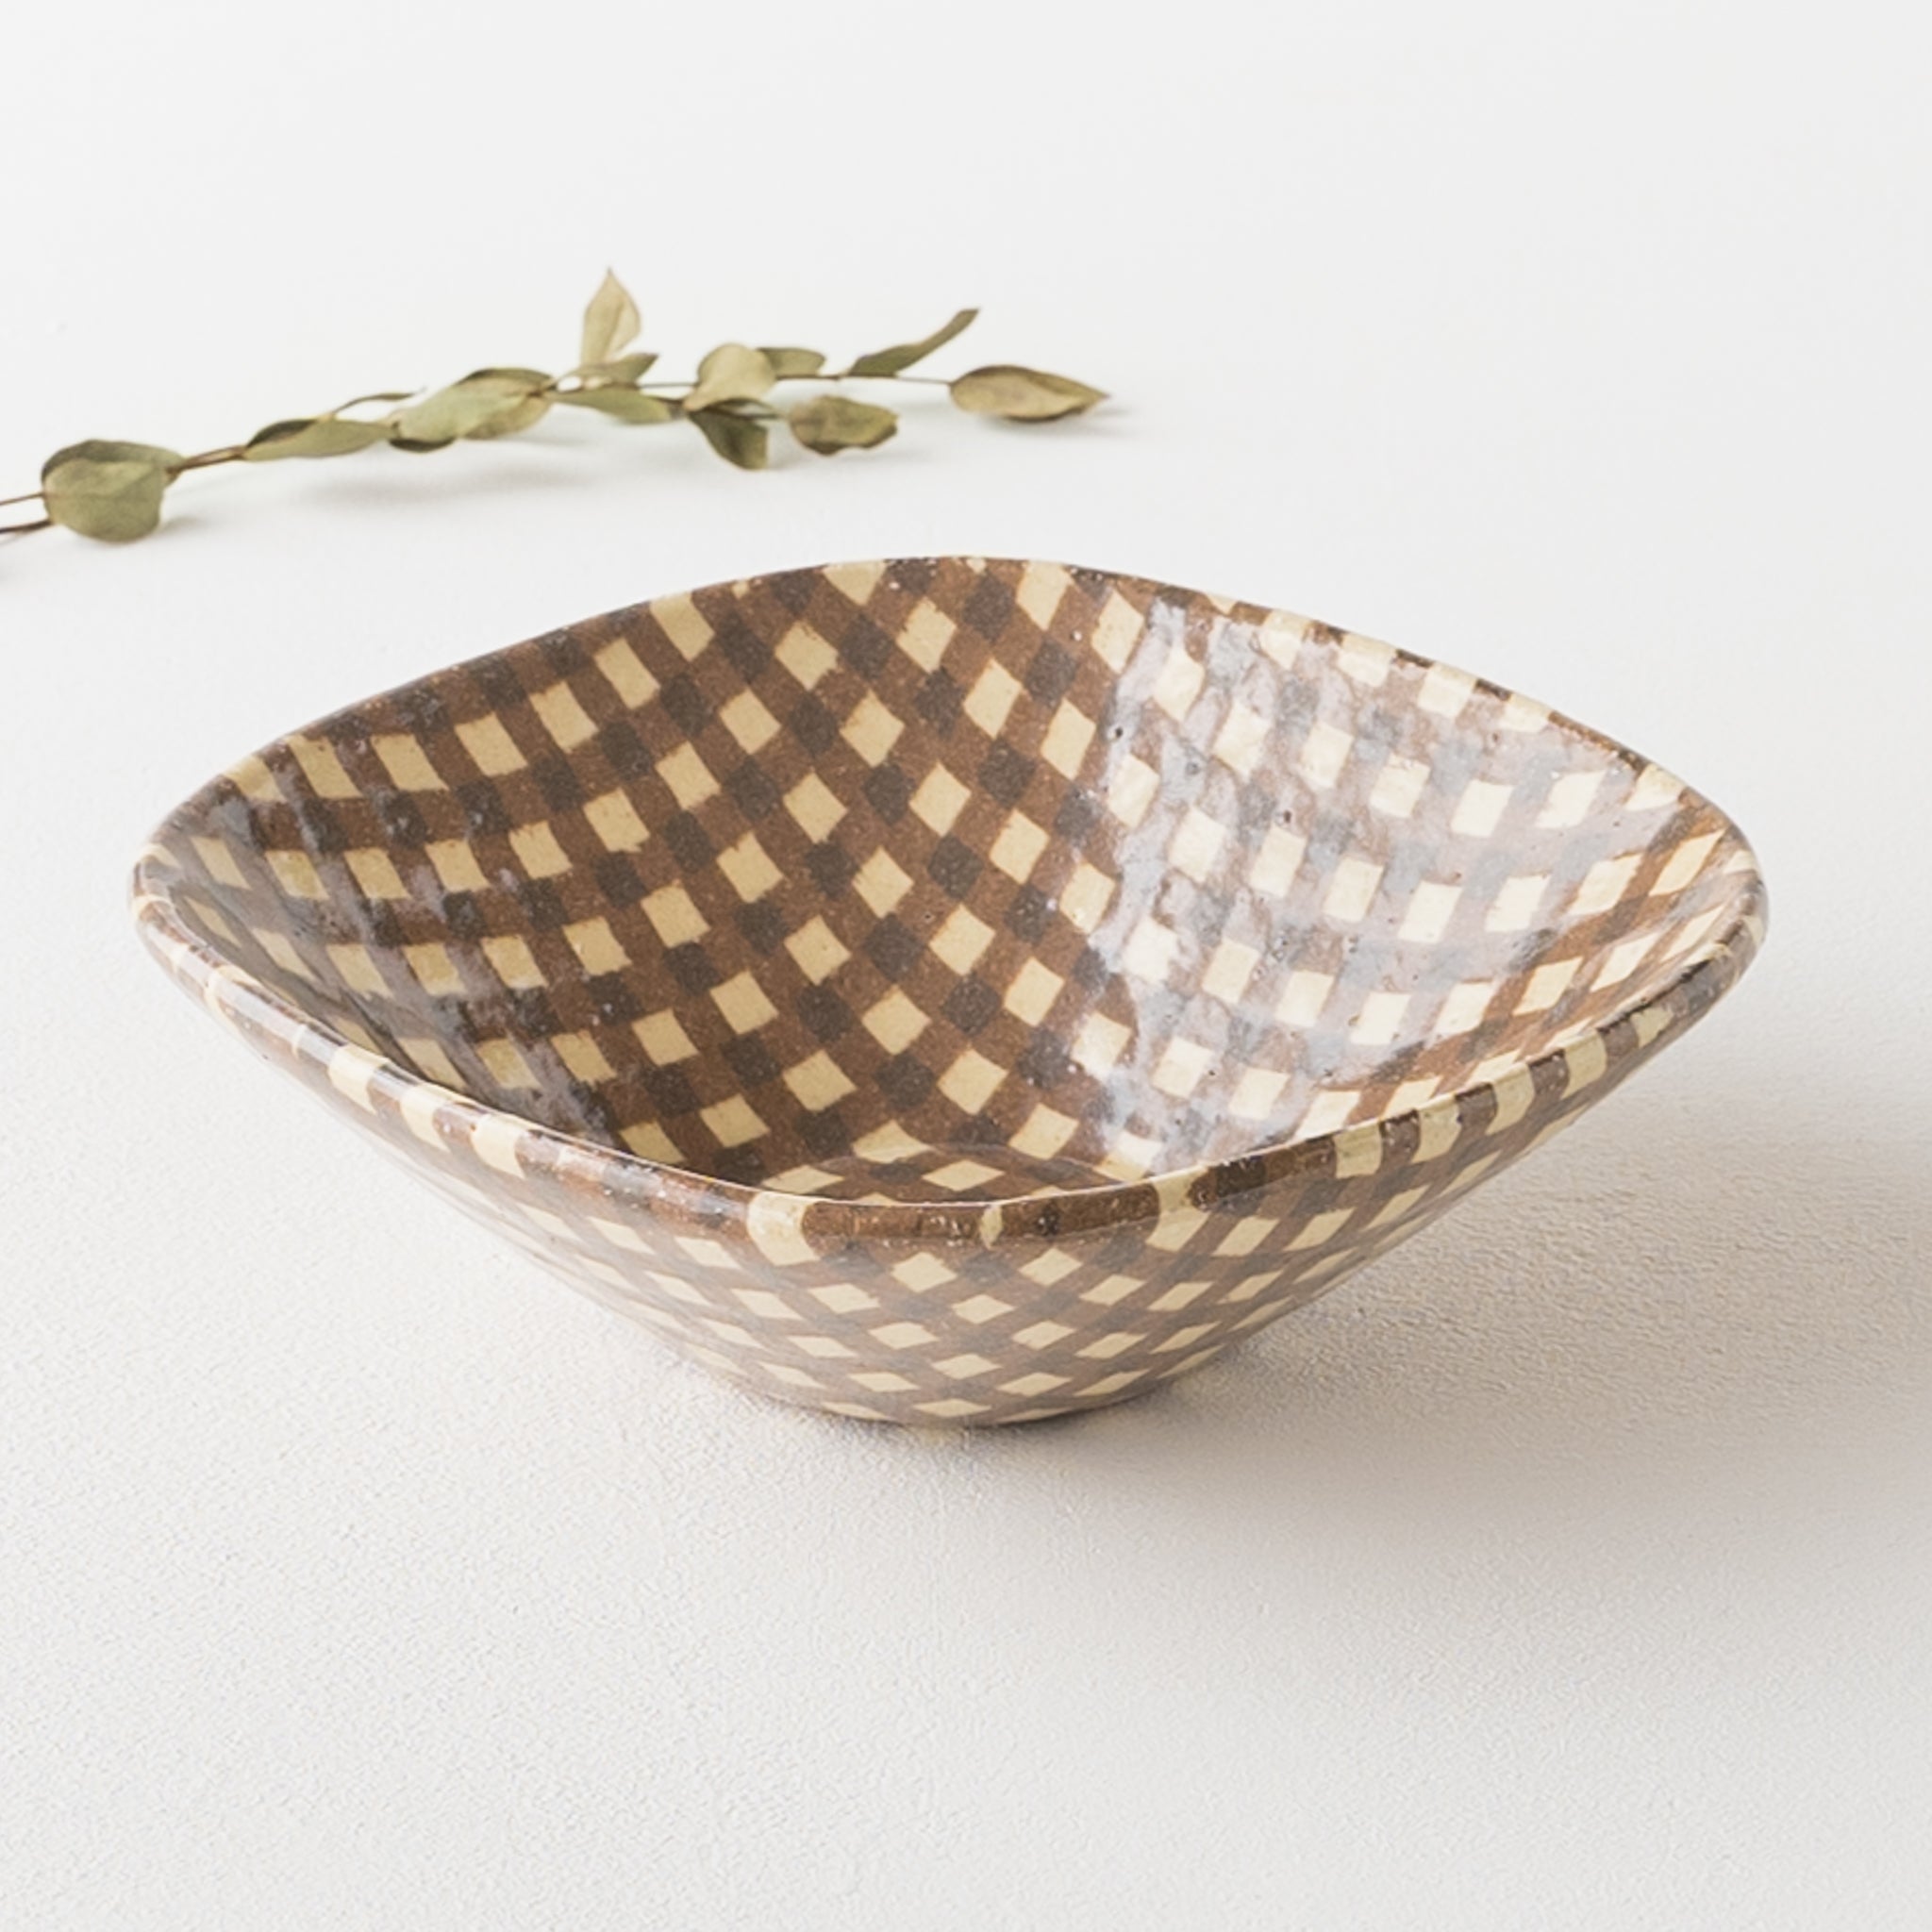 Hanako Sakashita's kneaded square bowl with stylish and cute gingham check